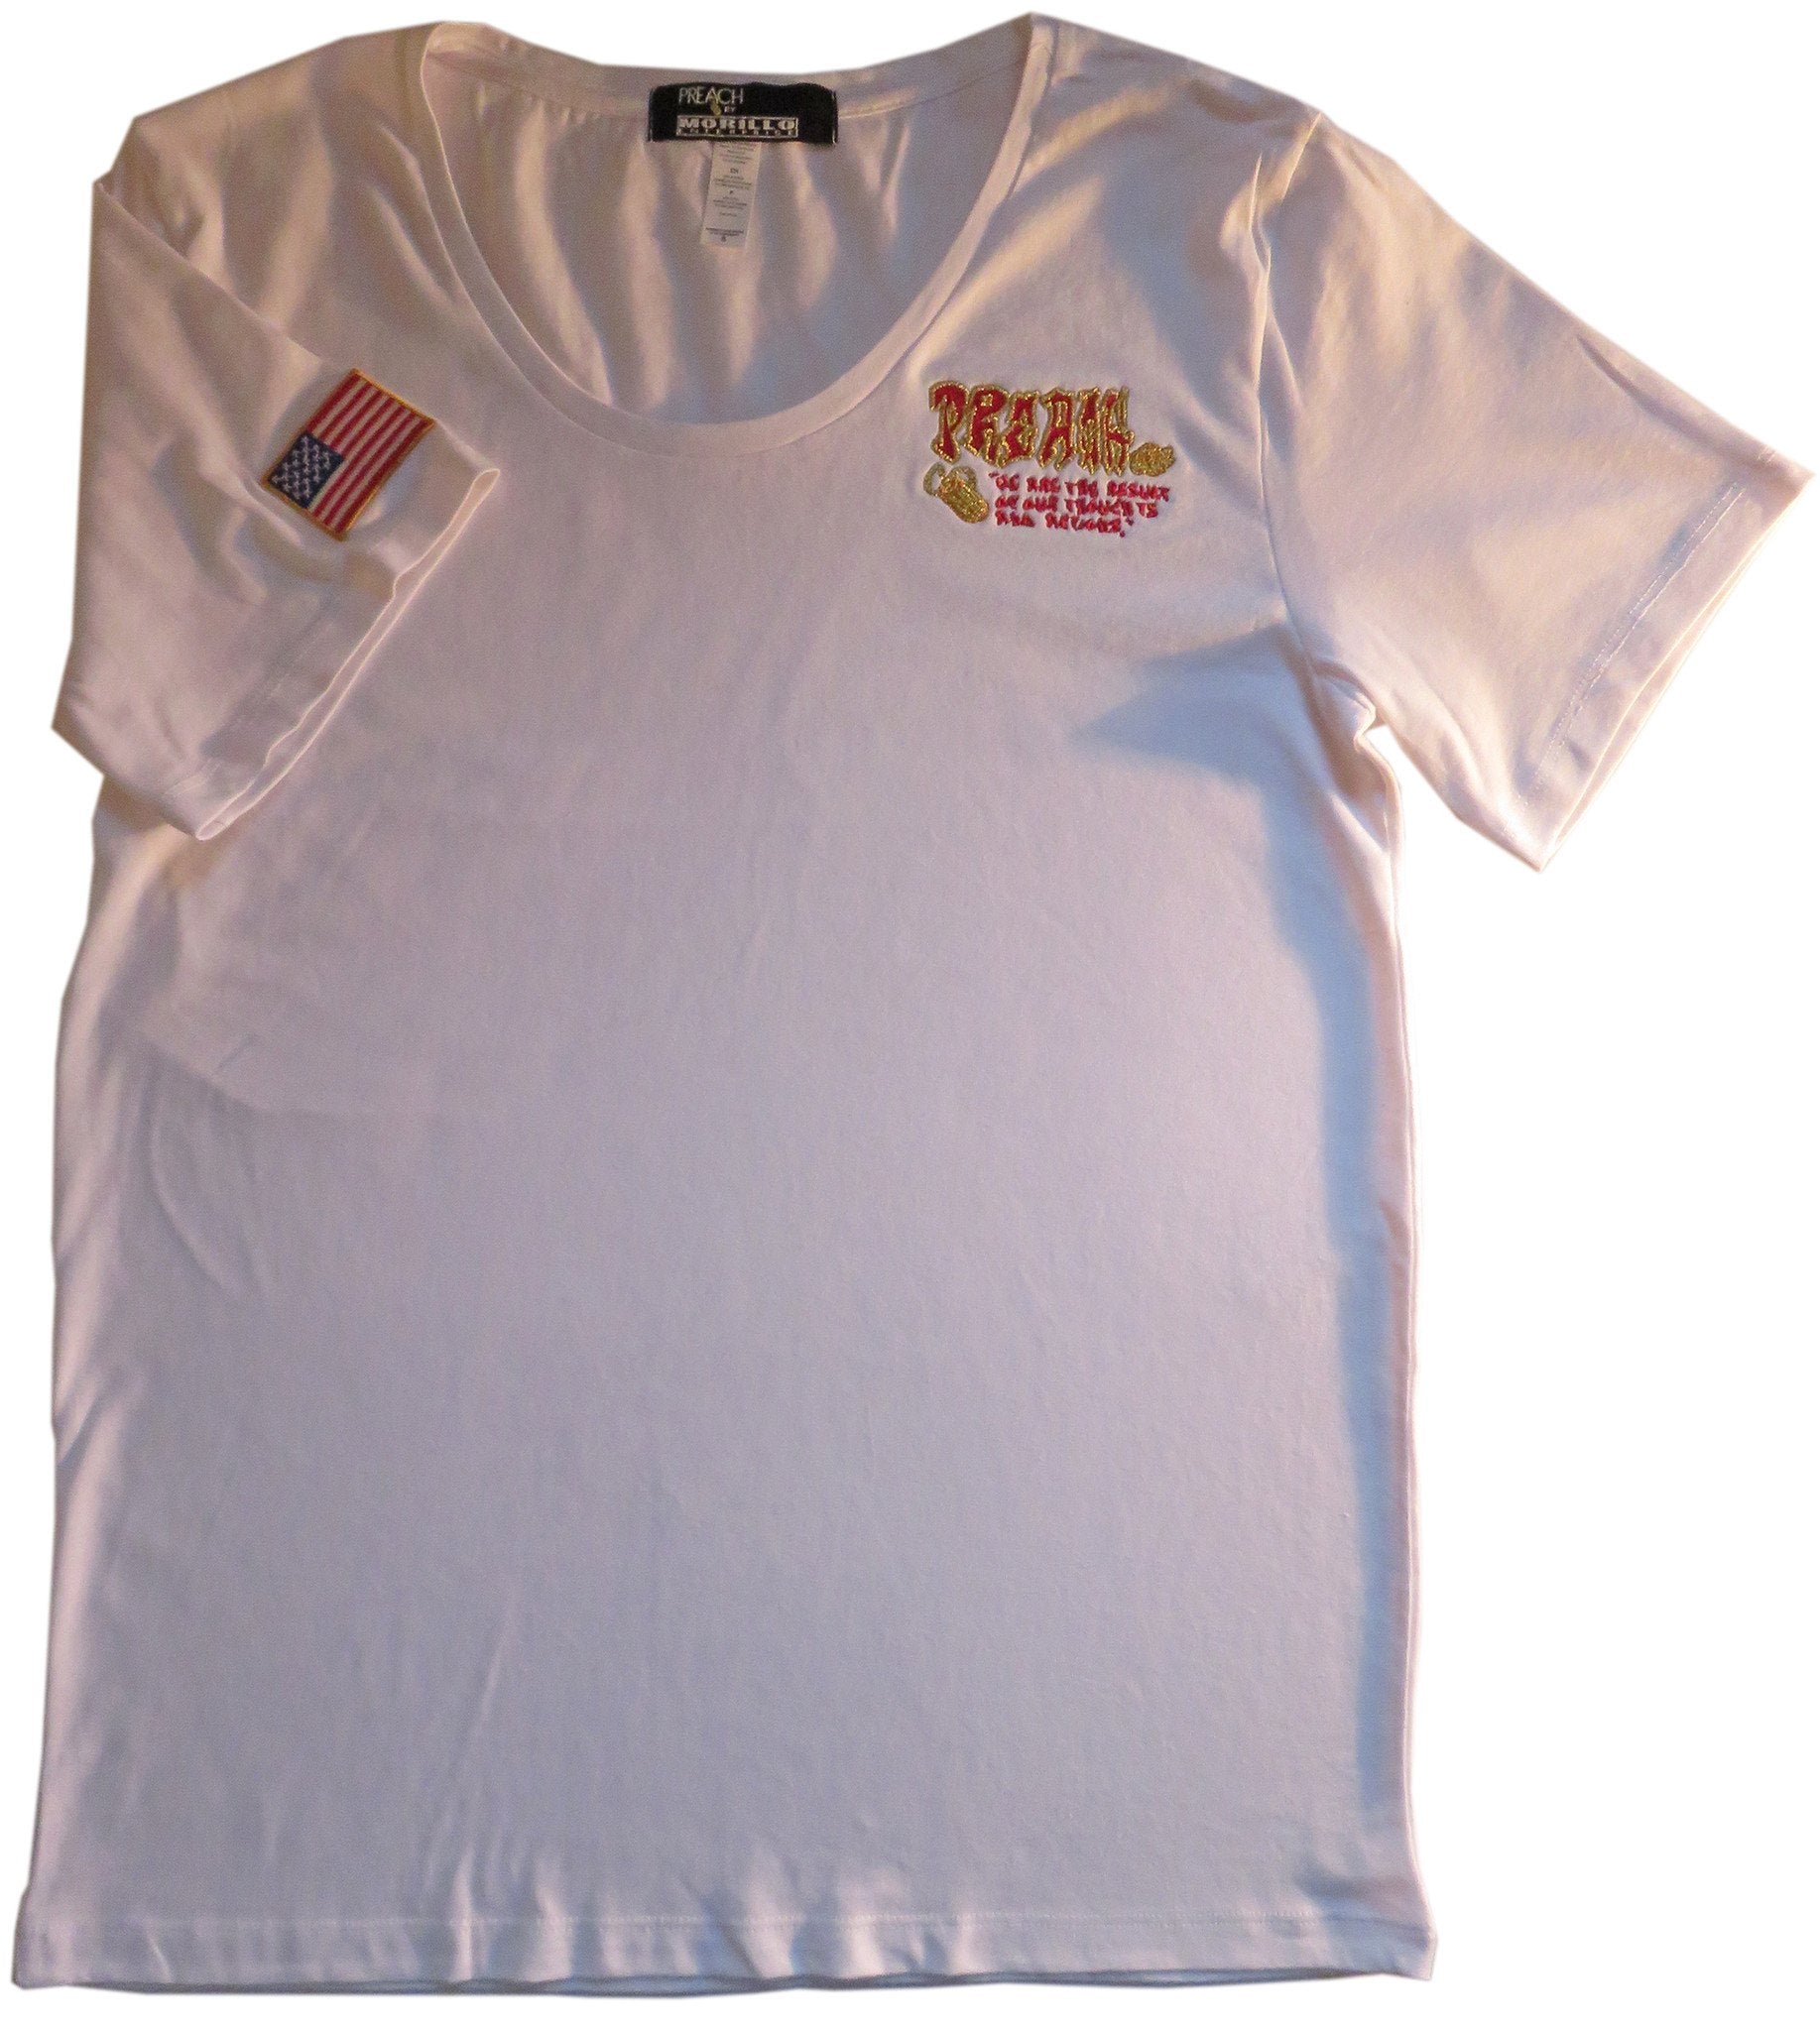 Morillo Enterprise Graffiti Art Embroidered Wide Neck T-Shirt